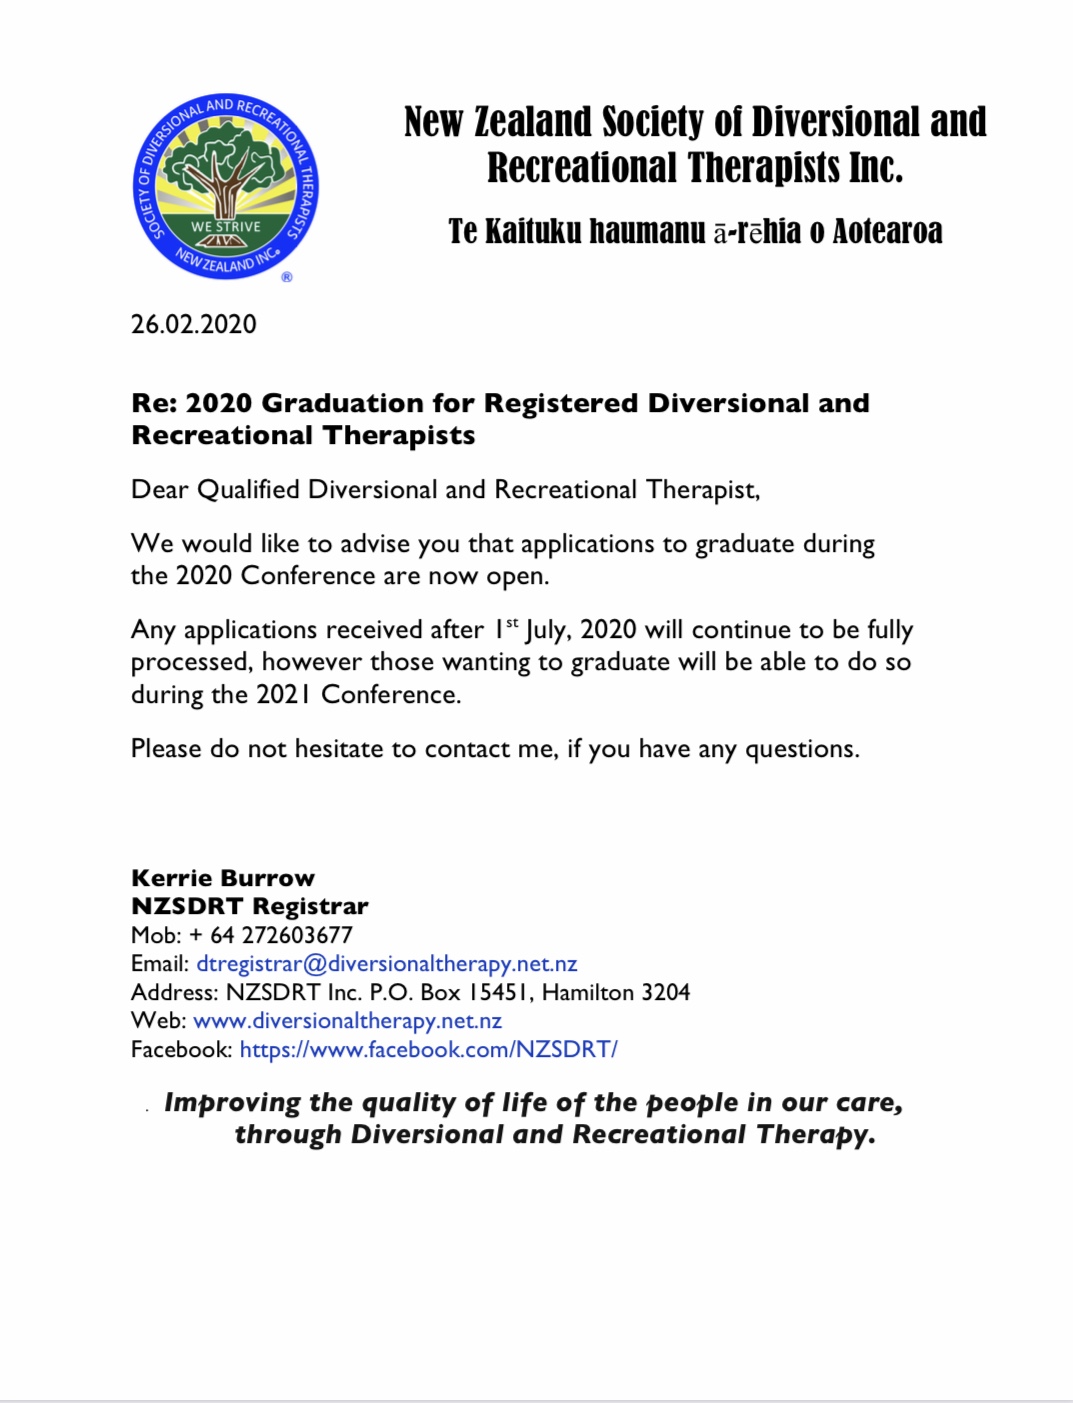 2020 Graduation for Registered DRTs